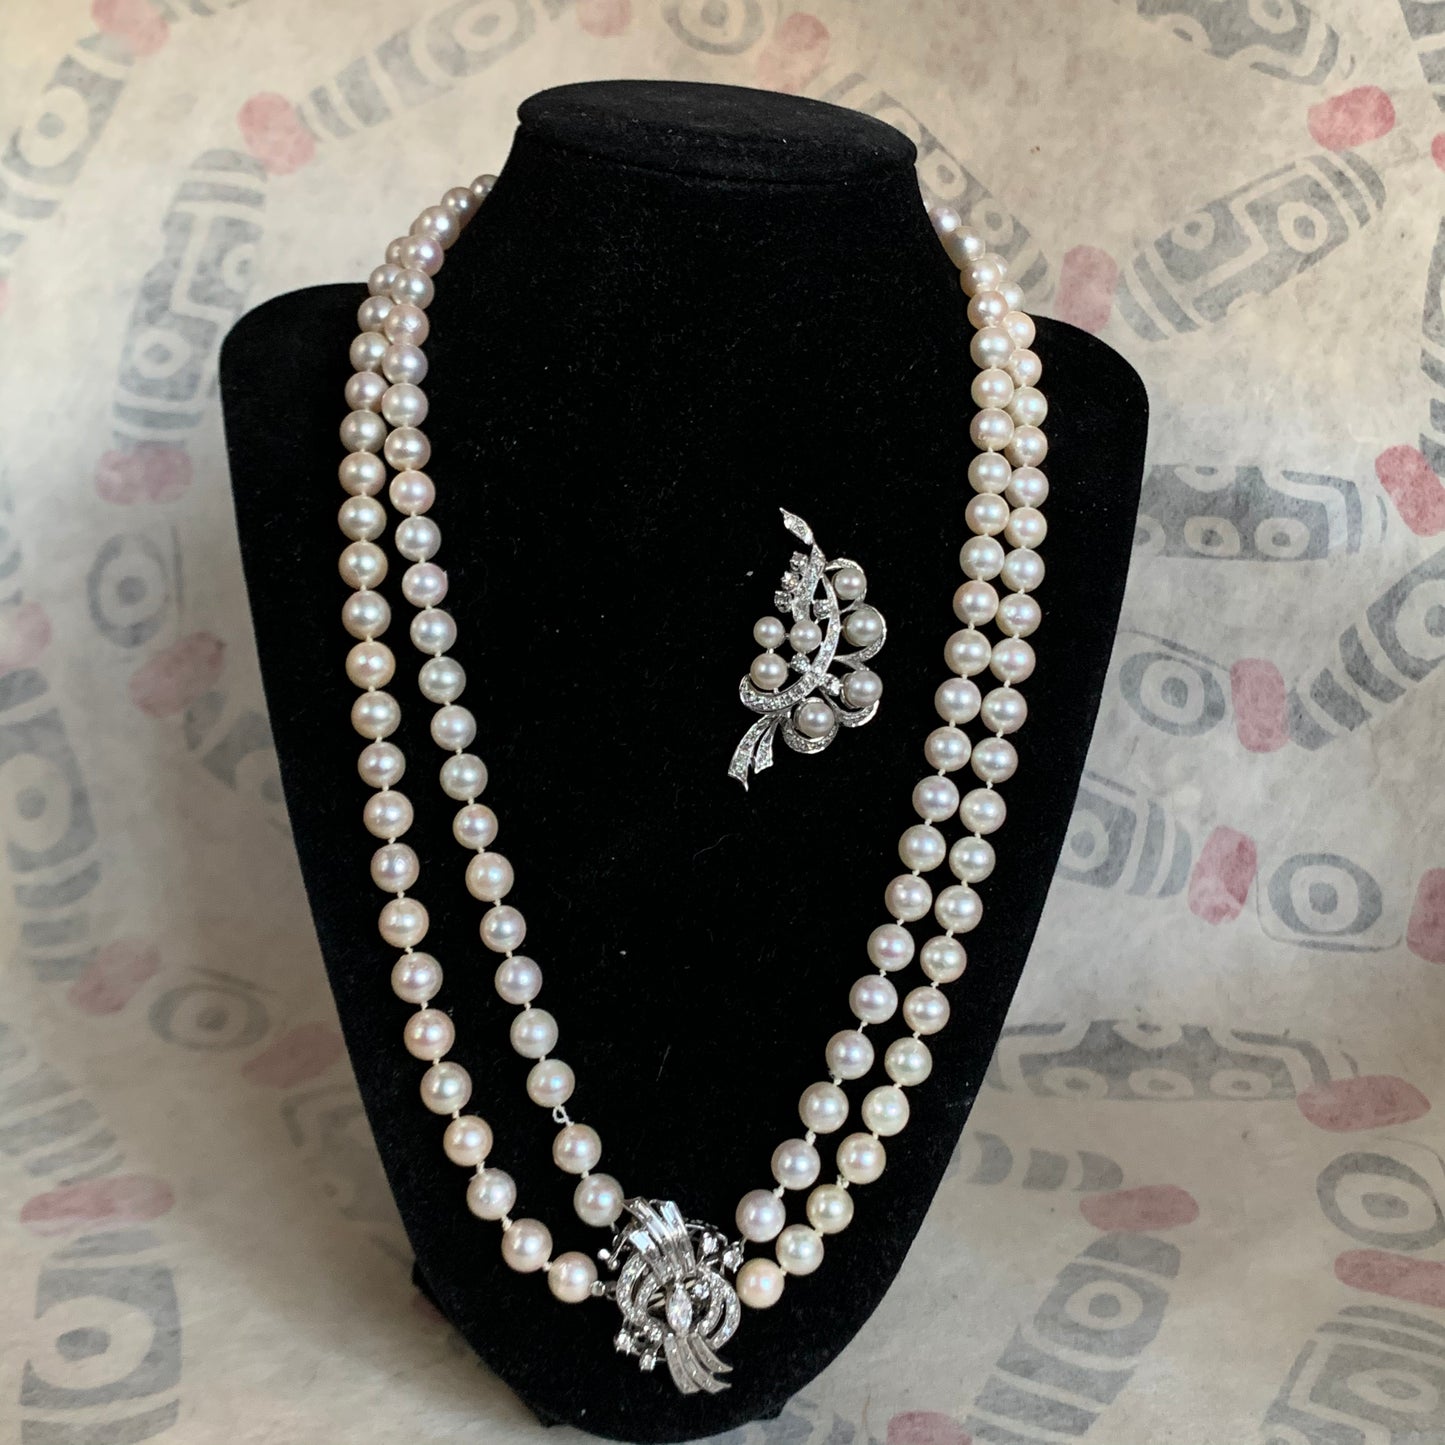 Pearl and diamond brooch